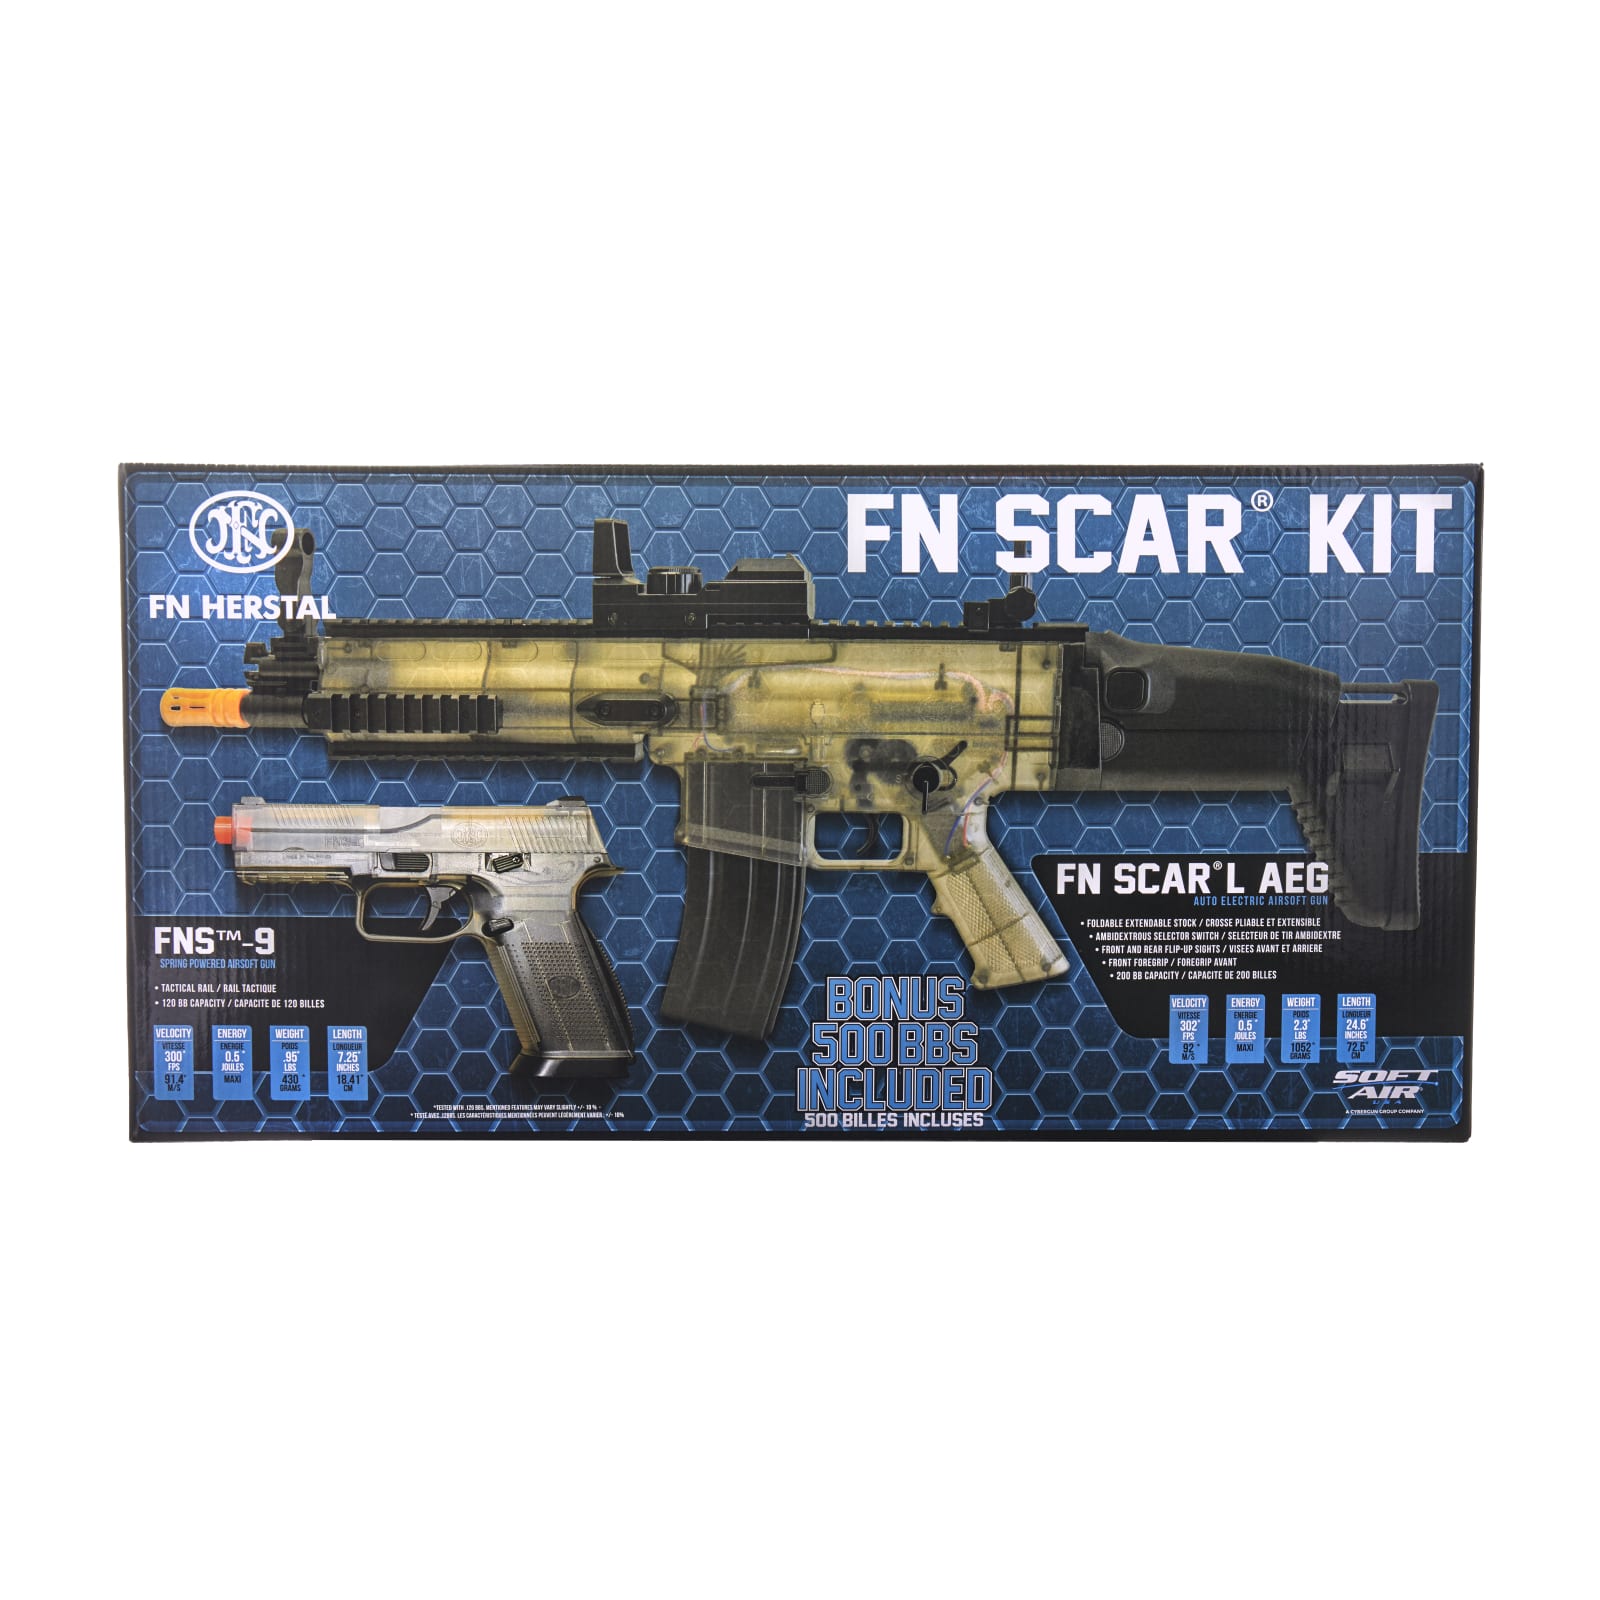 Air-soft gun kit